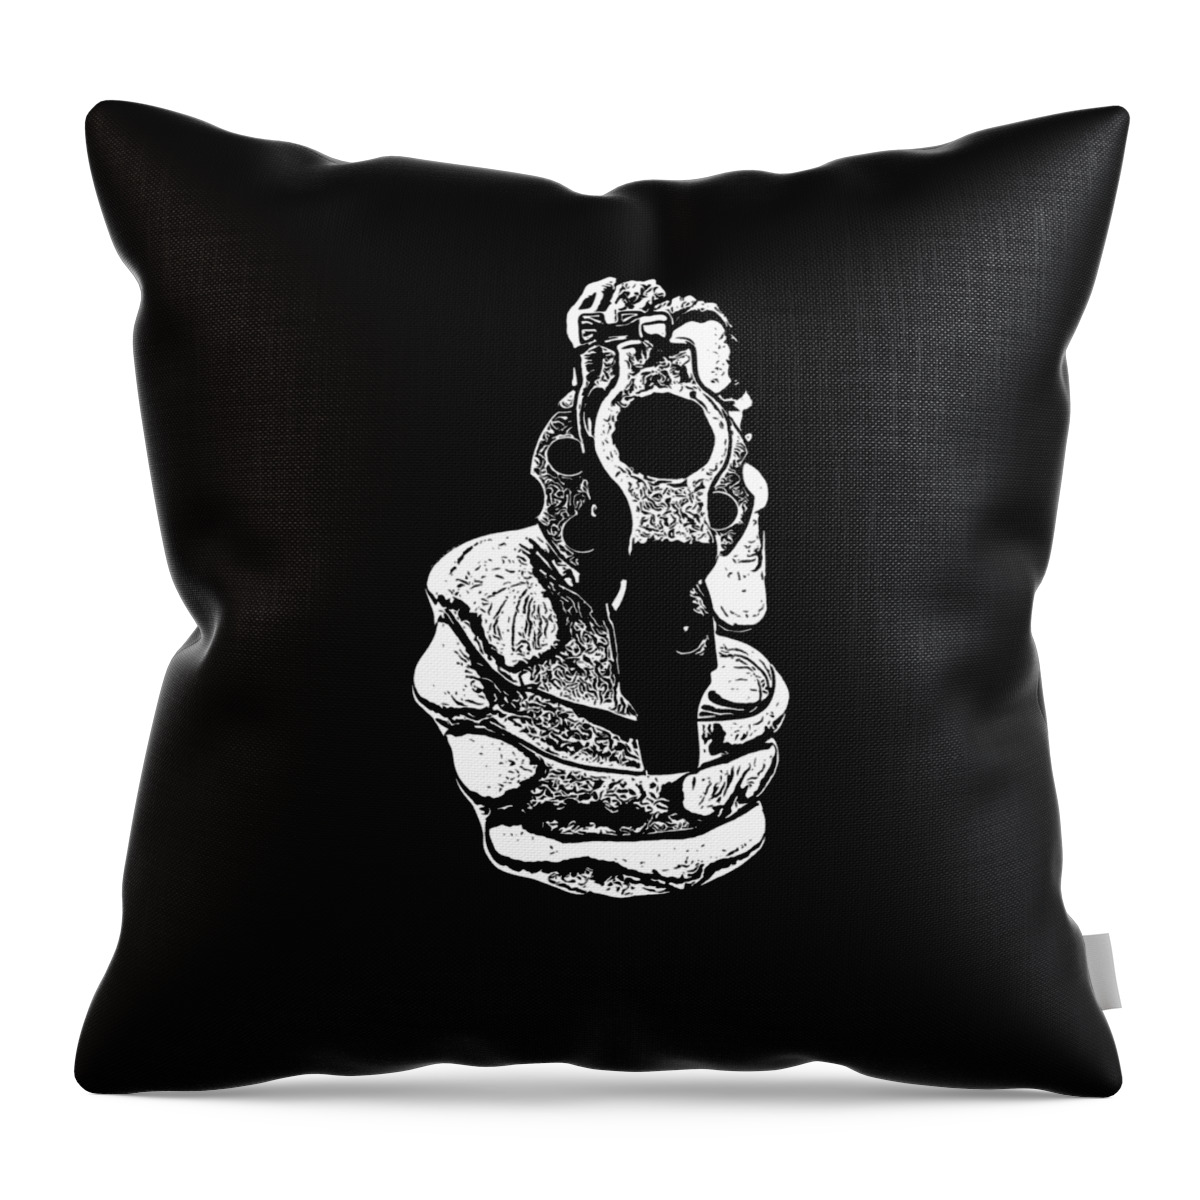 Gunman Throw Pillow featuring the photograph Gunman T-shirt by Edward Fielding